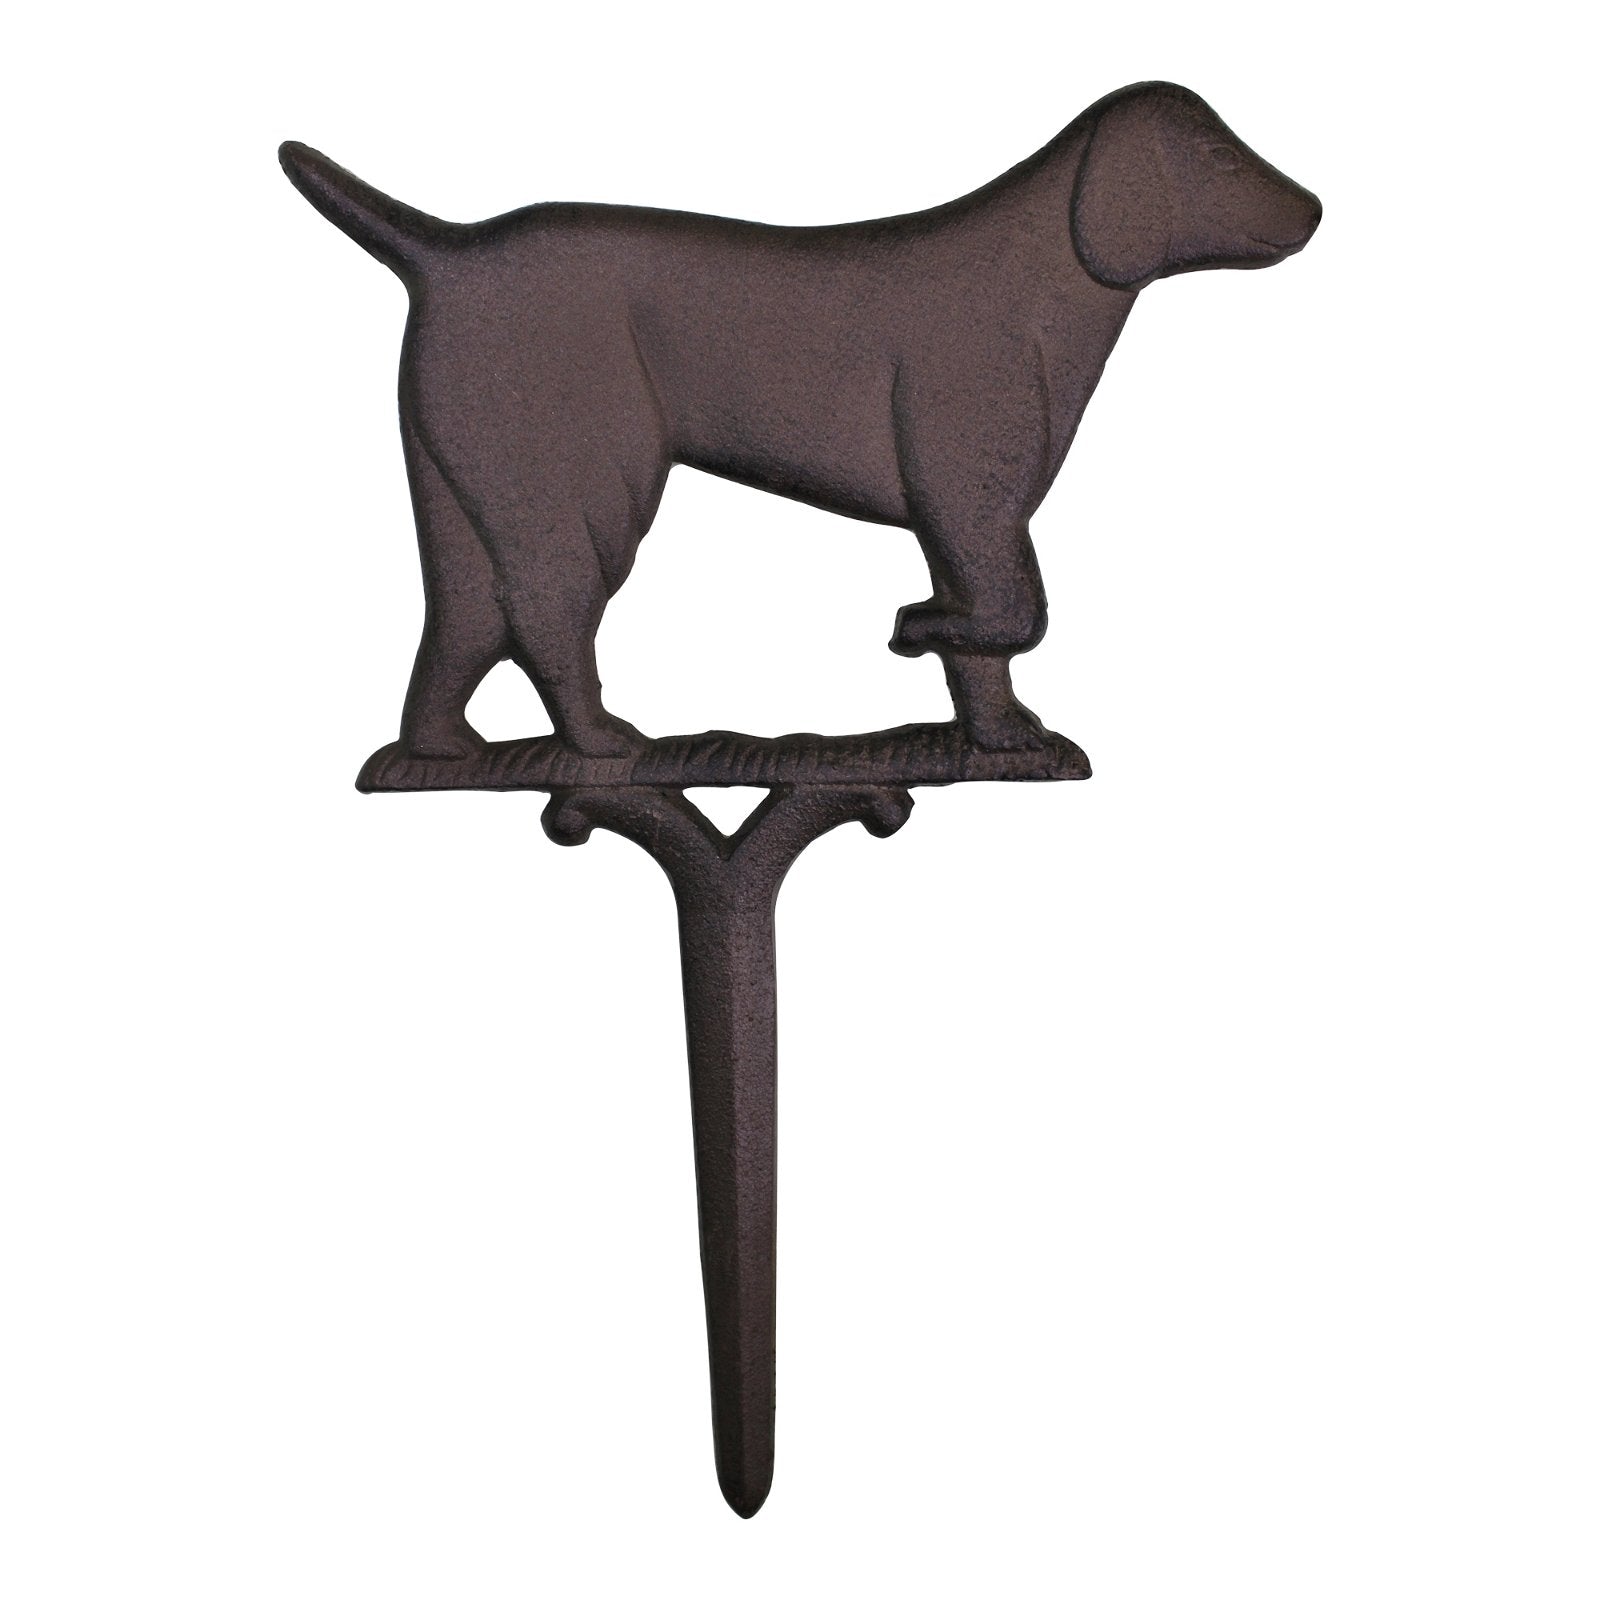 Rustic Cast Iron Garden Ornament, Dog